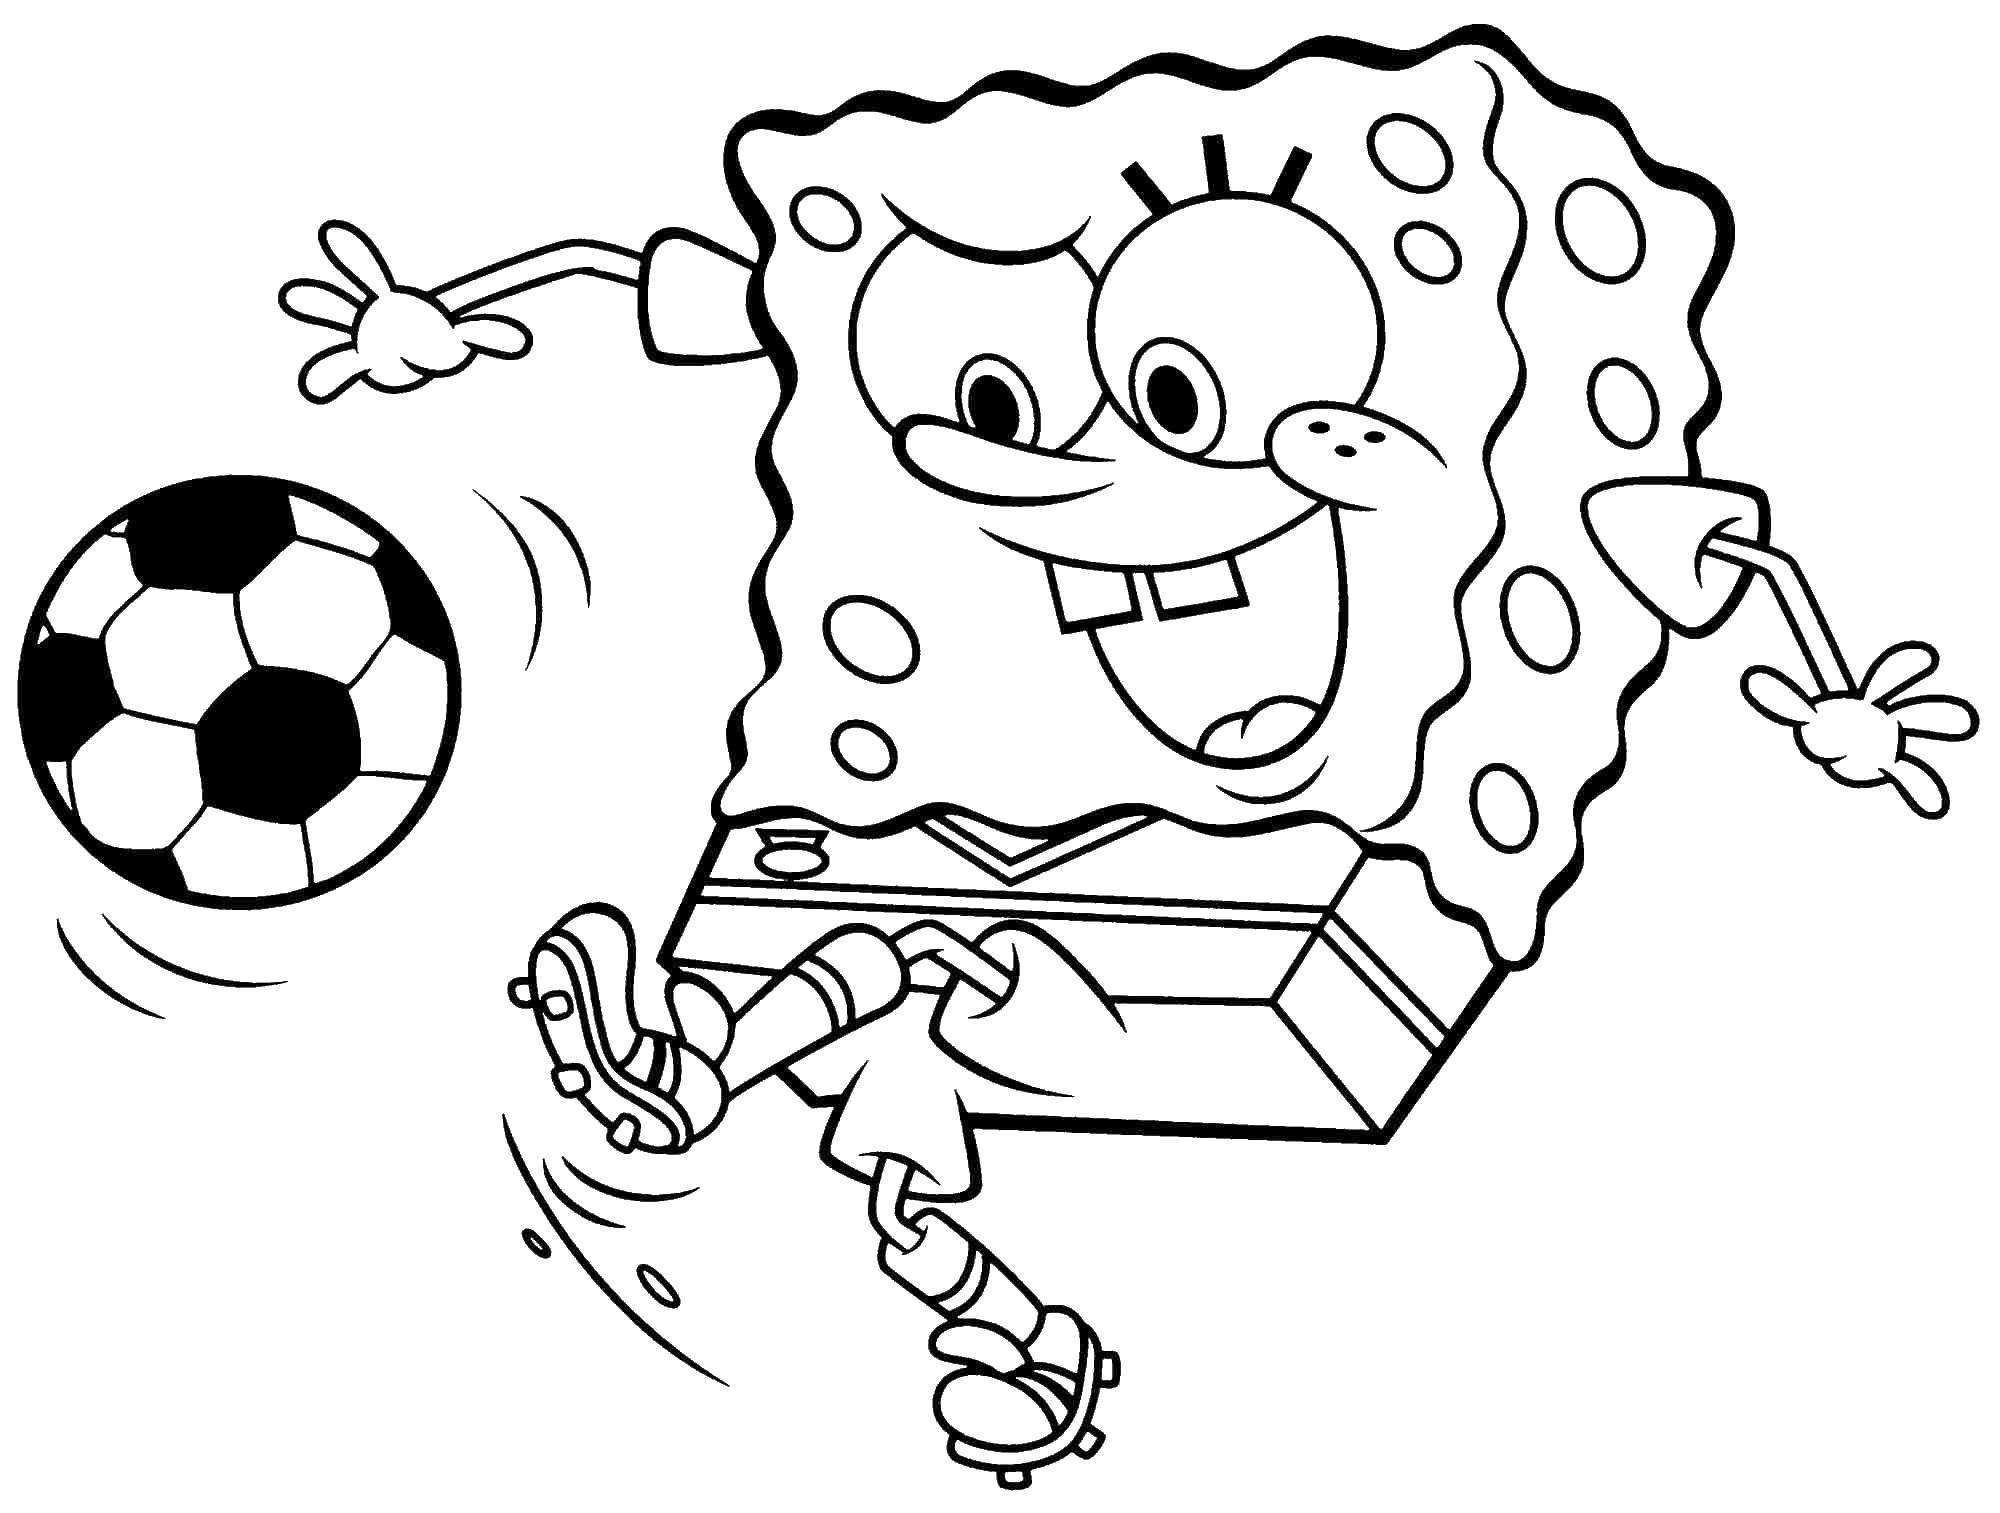 Coloring Spongebob kicks the ball. Category Spongebob. Tags:  Spongebob, soccer, ball.